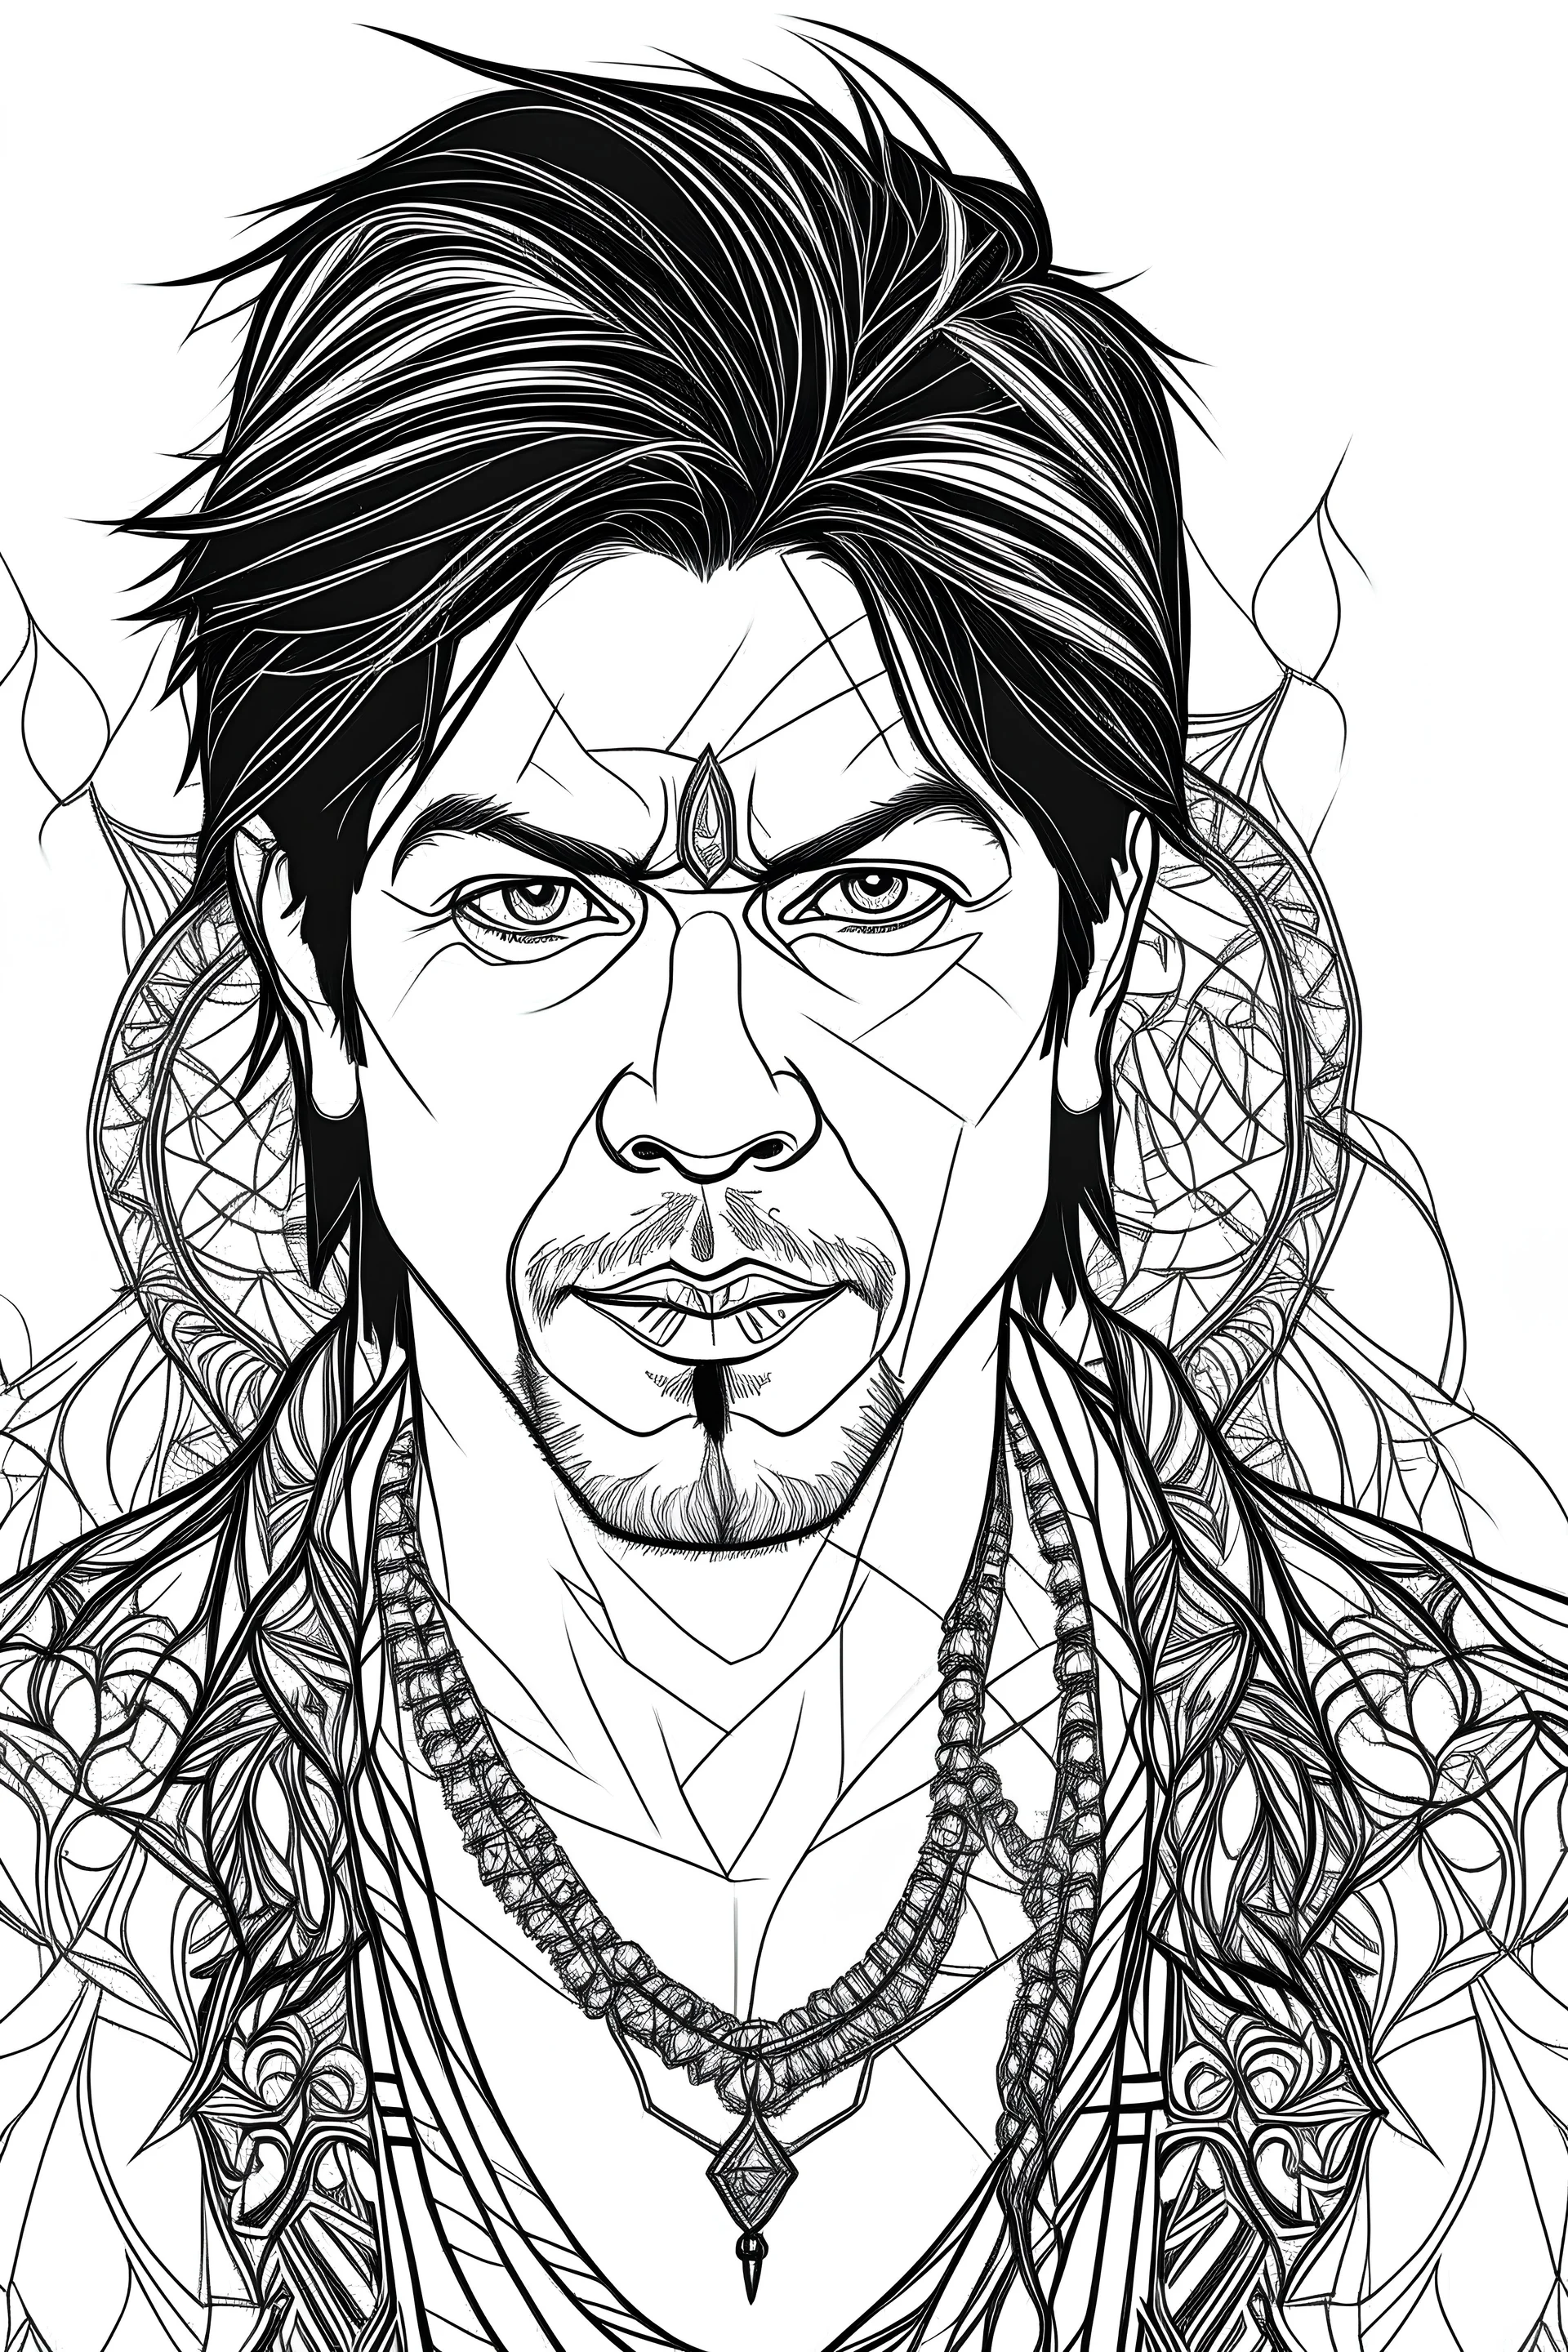 Raees Sketch By SRK Fan 🔥 - SHAH RUKH KHAN WORLD | Facebook